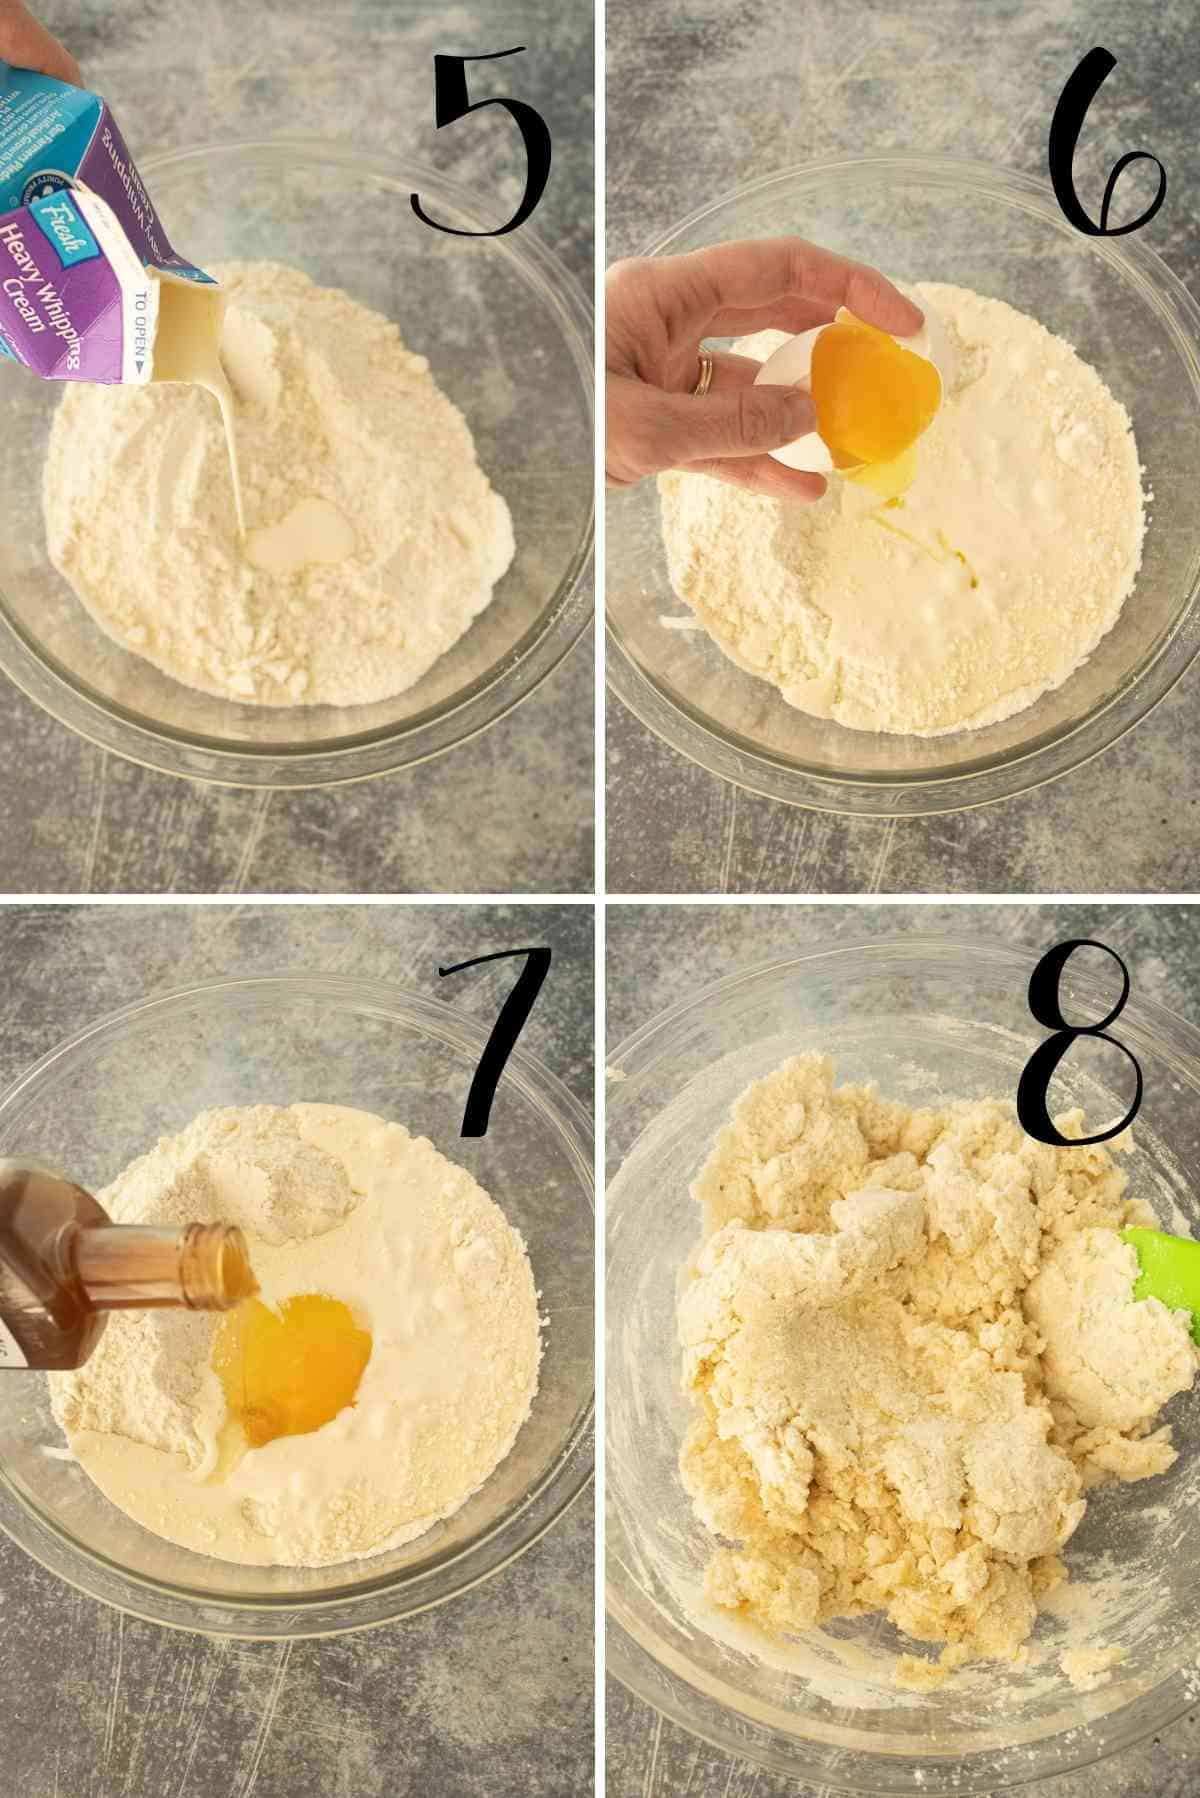 Cream, egg and vanilla mixed in to create a dough.